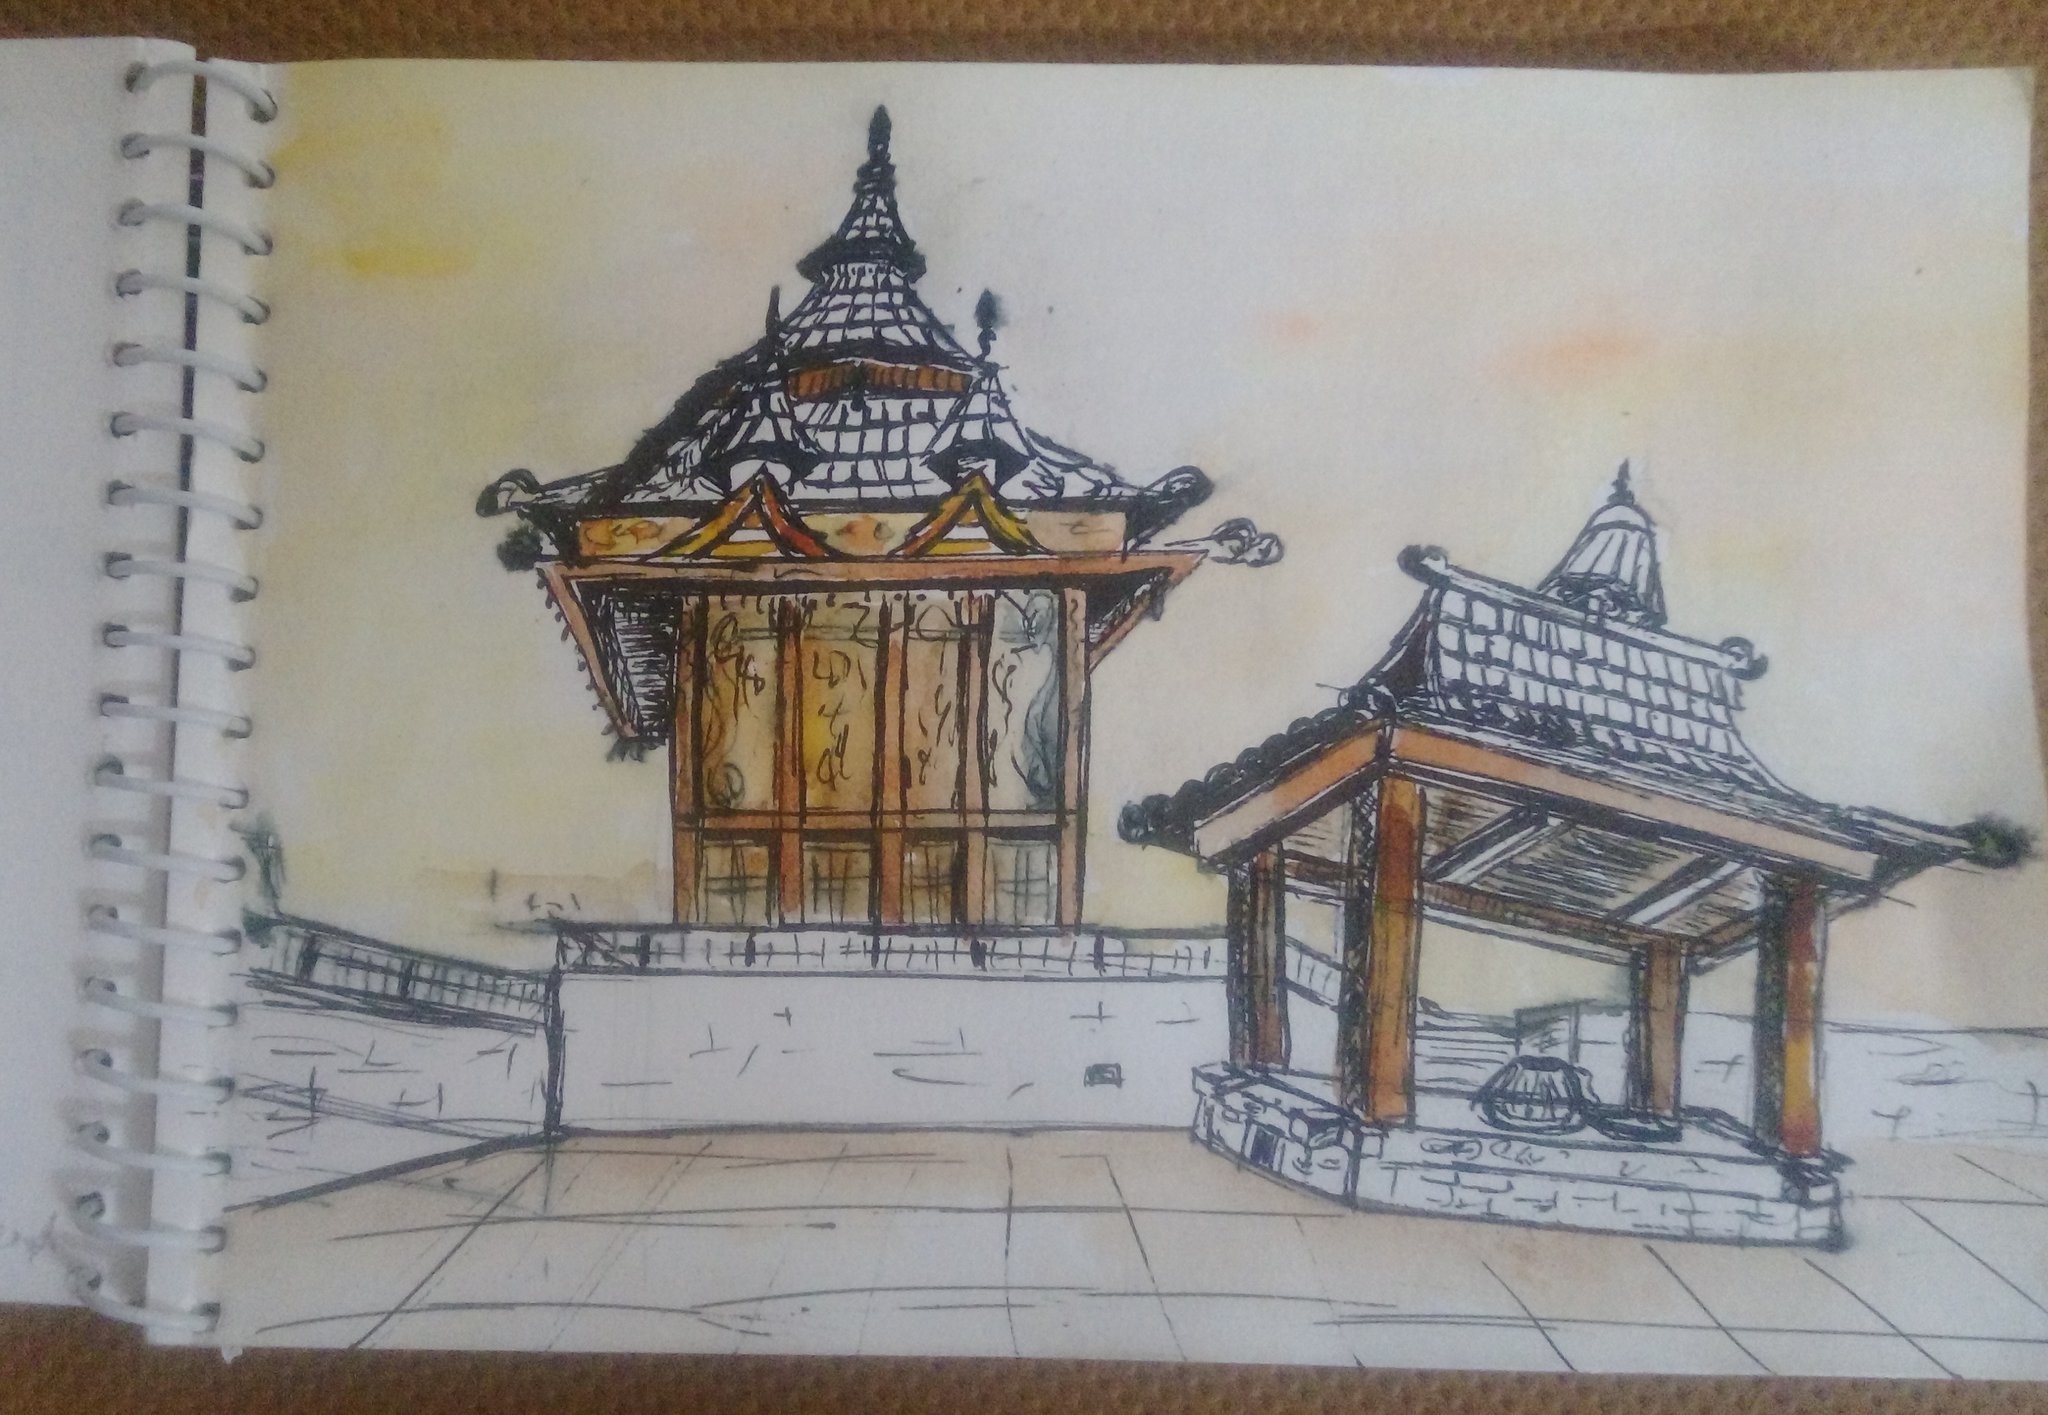 Global Nepali Museum - Drawings | Page 4 of 7 | Global Nepali Museum